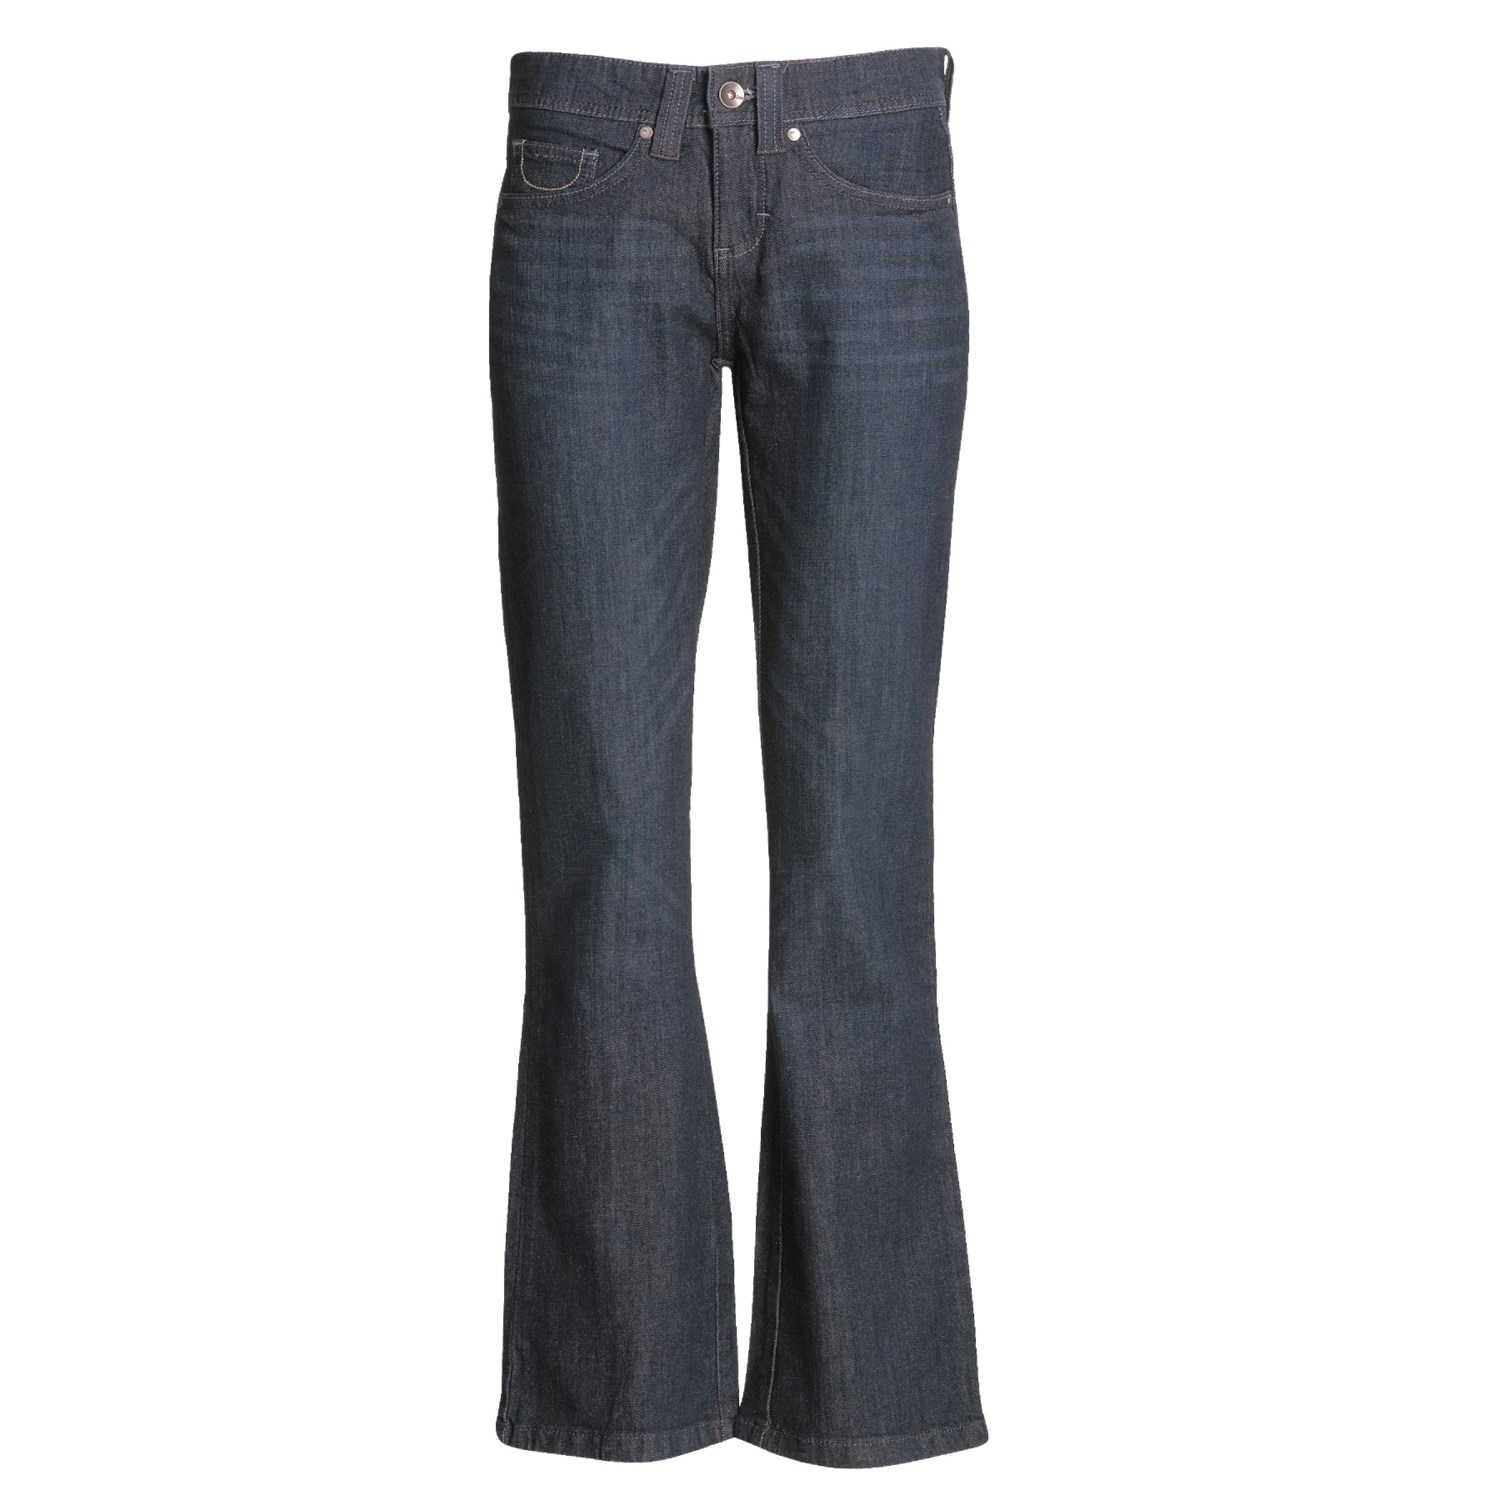 Lee Stretch Dark Denim Jeans (For Women) 3301A - Save 40%